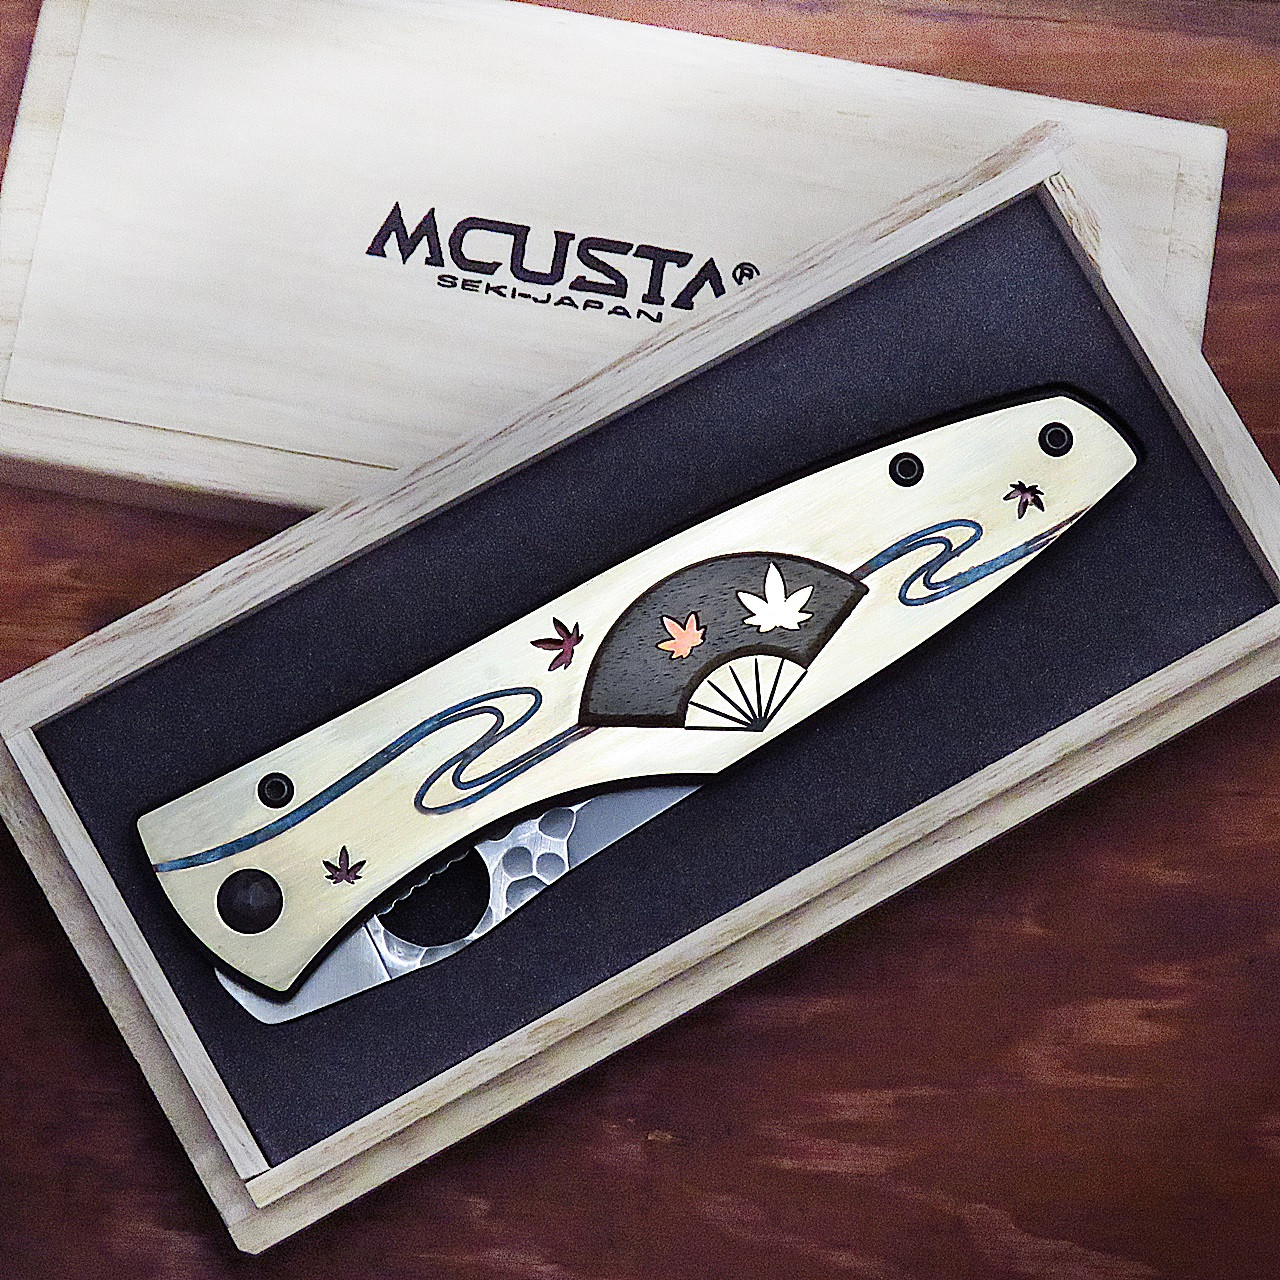 Mcusta Platinum Label Limited Edition "Shiki" Four Seasons Autumn Folder SPG2 Core San Mai Brass with wood inlay 4.75" Folding knife